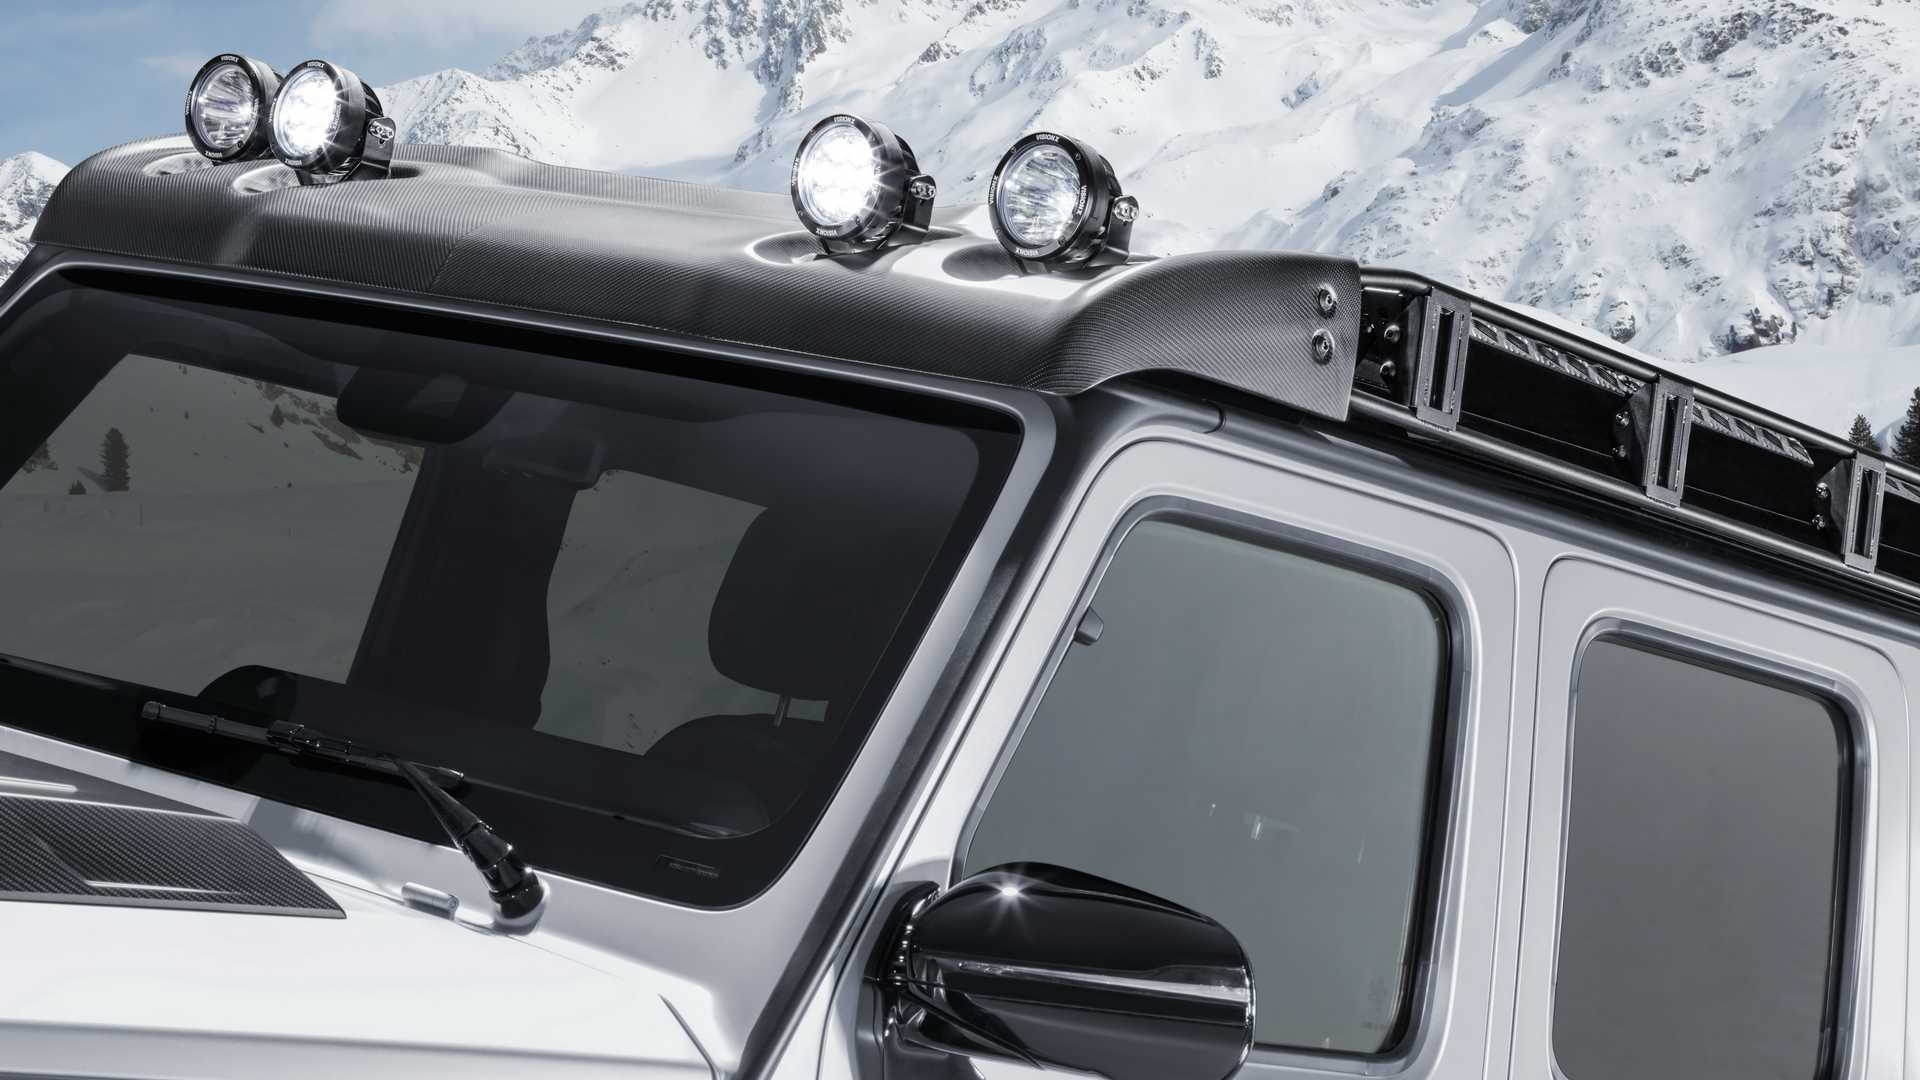 Brabus XLP Adventure 800 based on the 2020 Mercedes-AMG G63